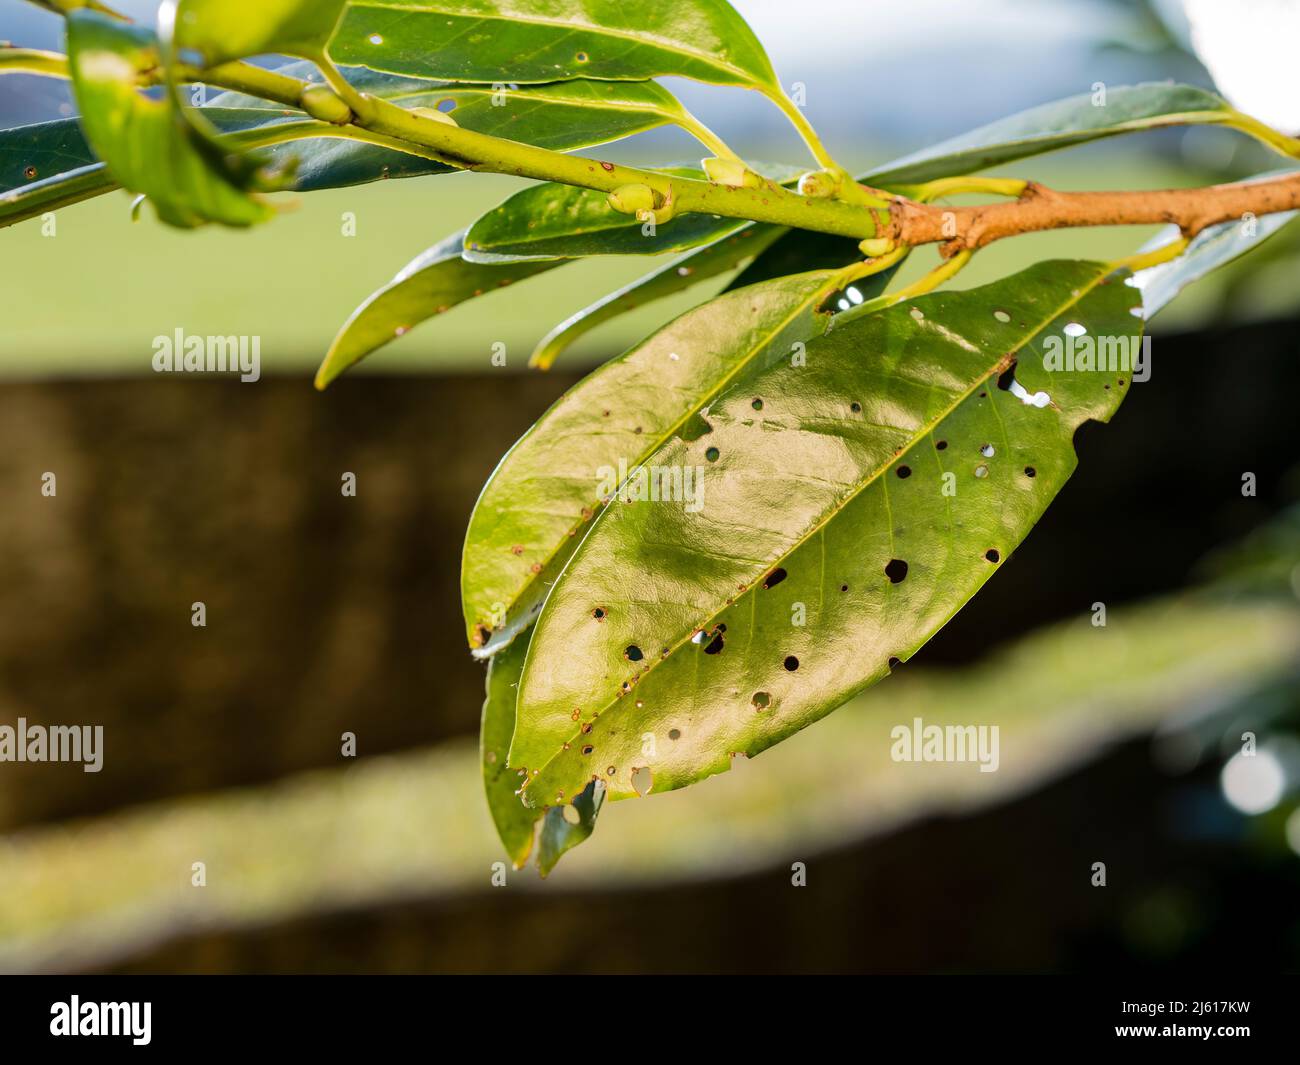 image shows leaves of cherry laurel Prunus laurocerasus affected by leaf spot fungi Stigmina carpophila Stock Photo